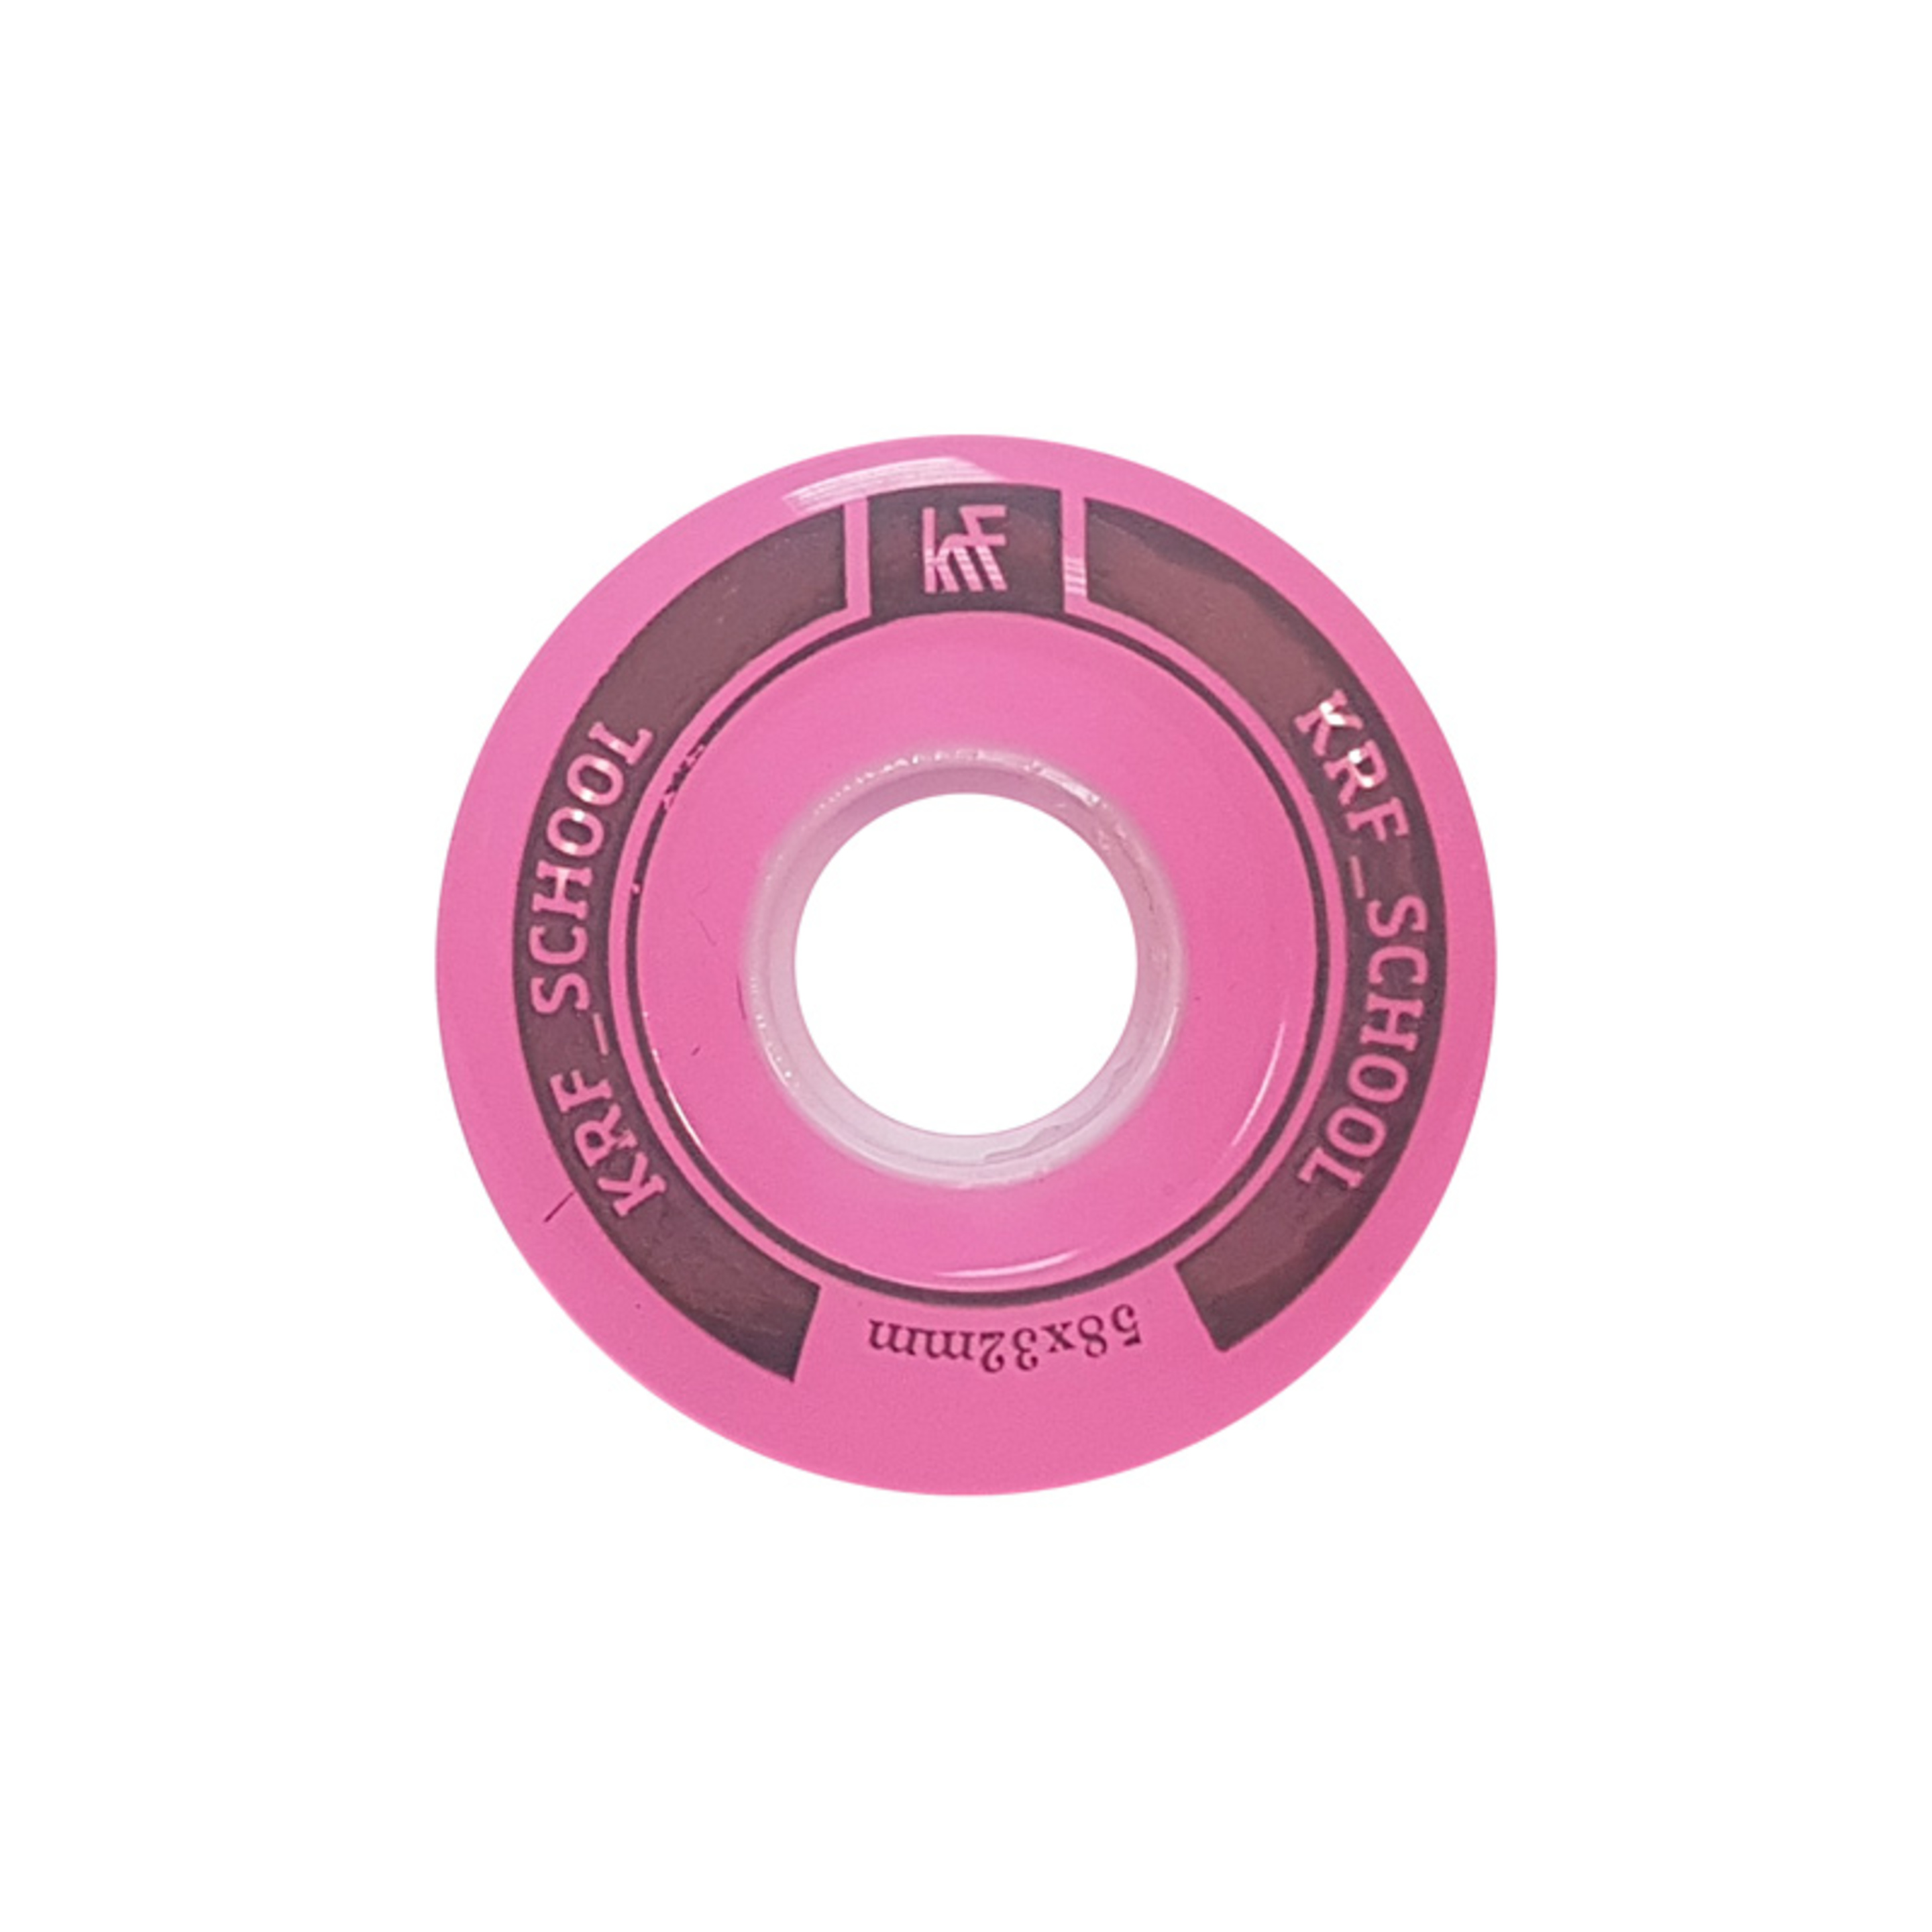 Krf School Ruedas Rosas Para Patines 58x32mm - rosa - 